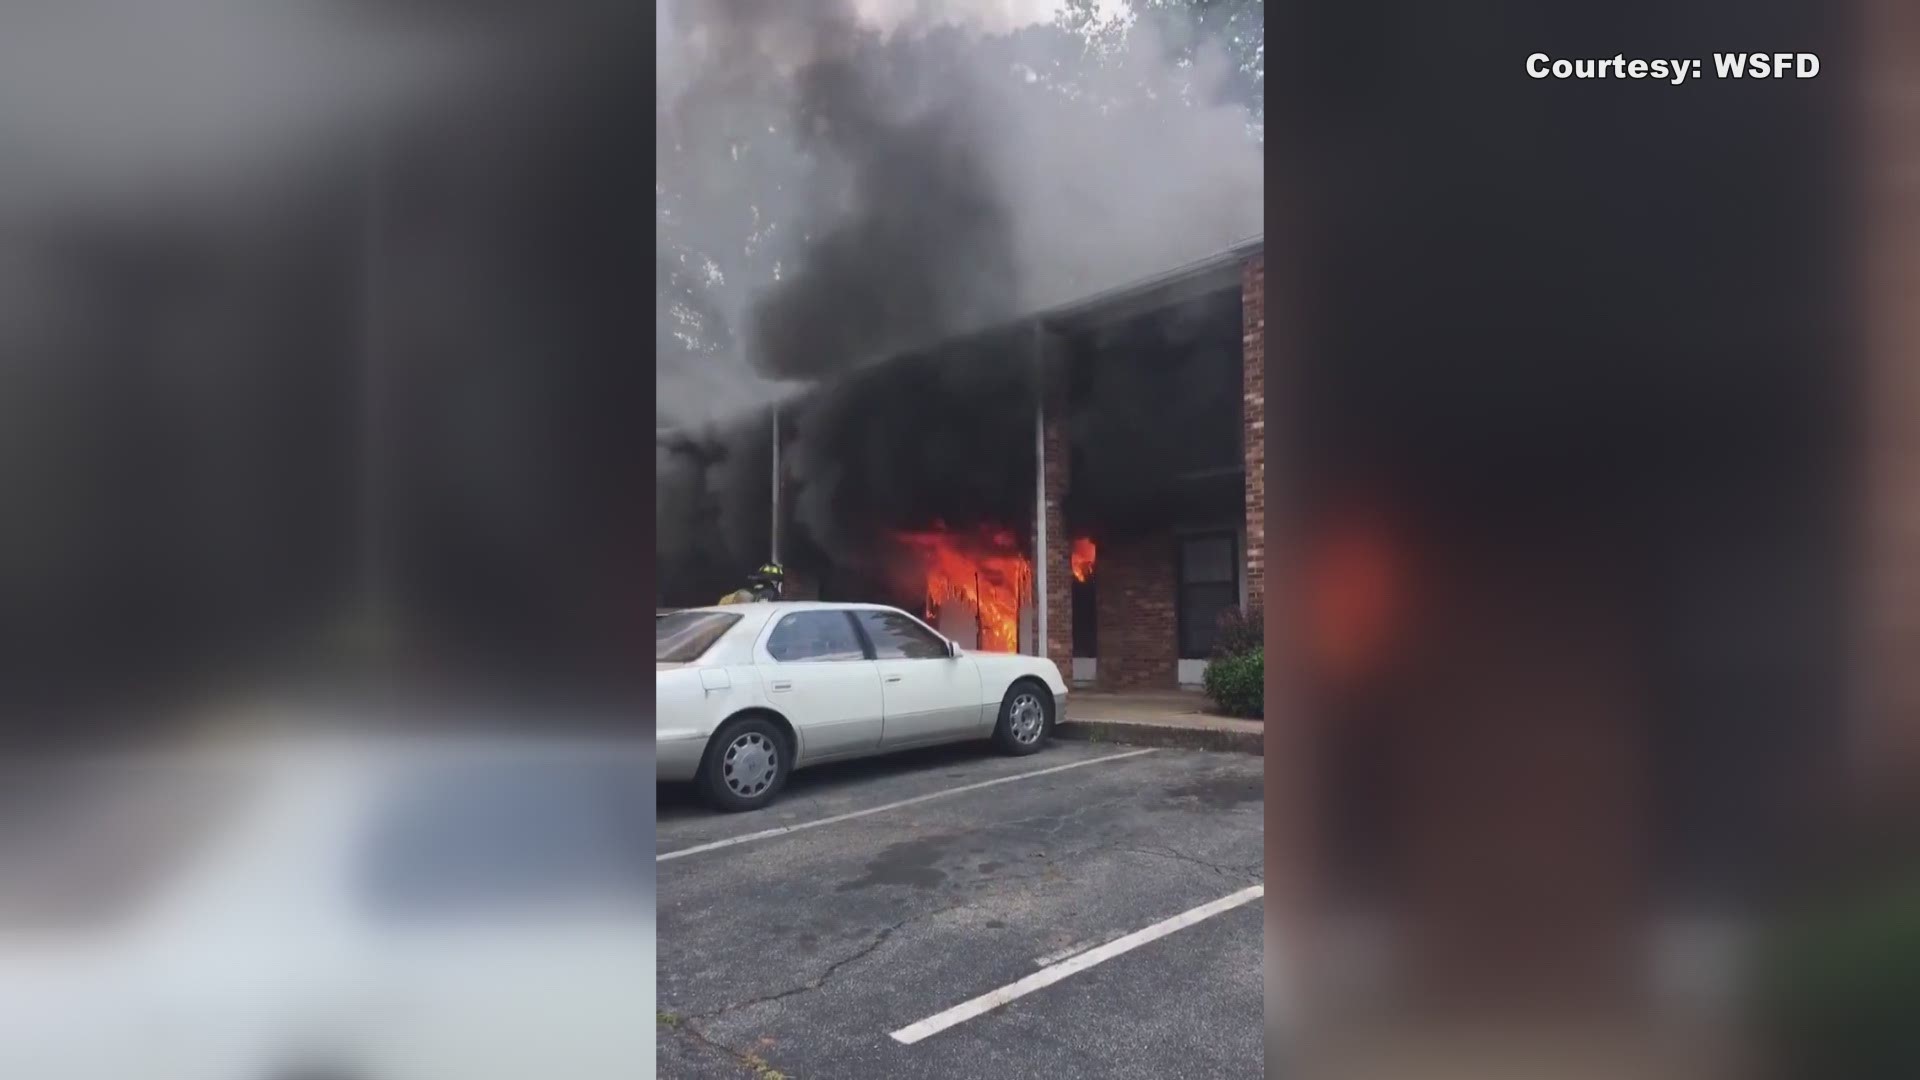 The fire occurred in the 5700 block of Shattalon Drive in Winston-Salem.